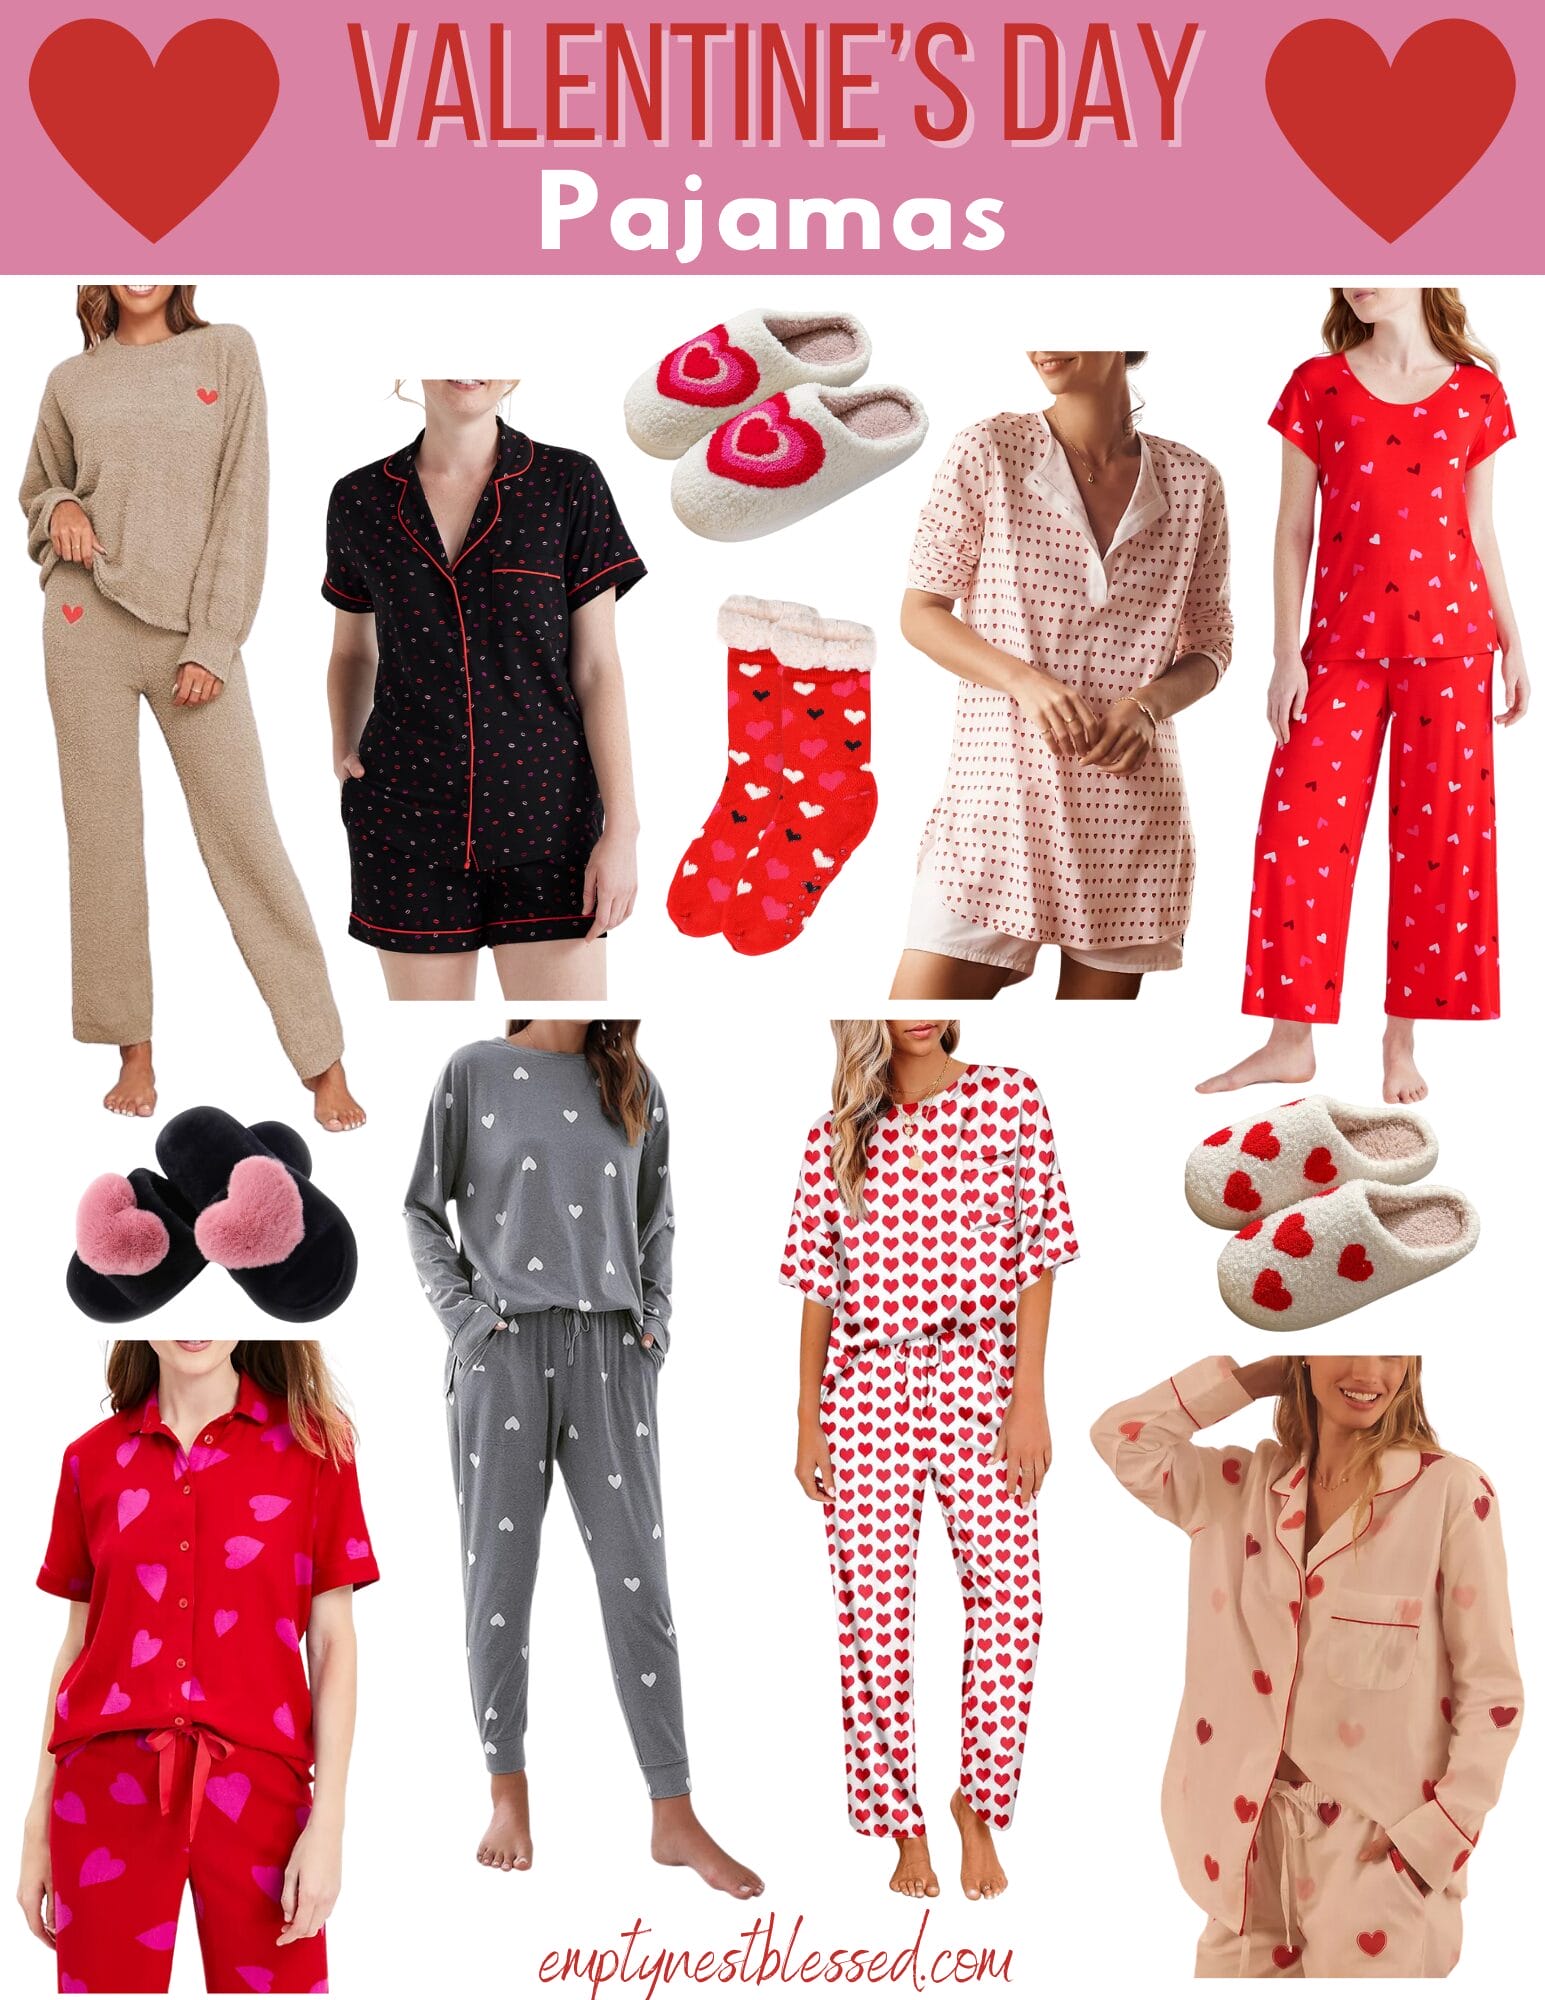 15 best Valentine's pajamas everyone will love - Reviewed